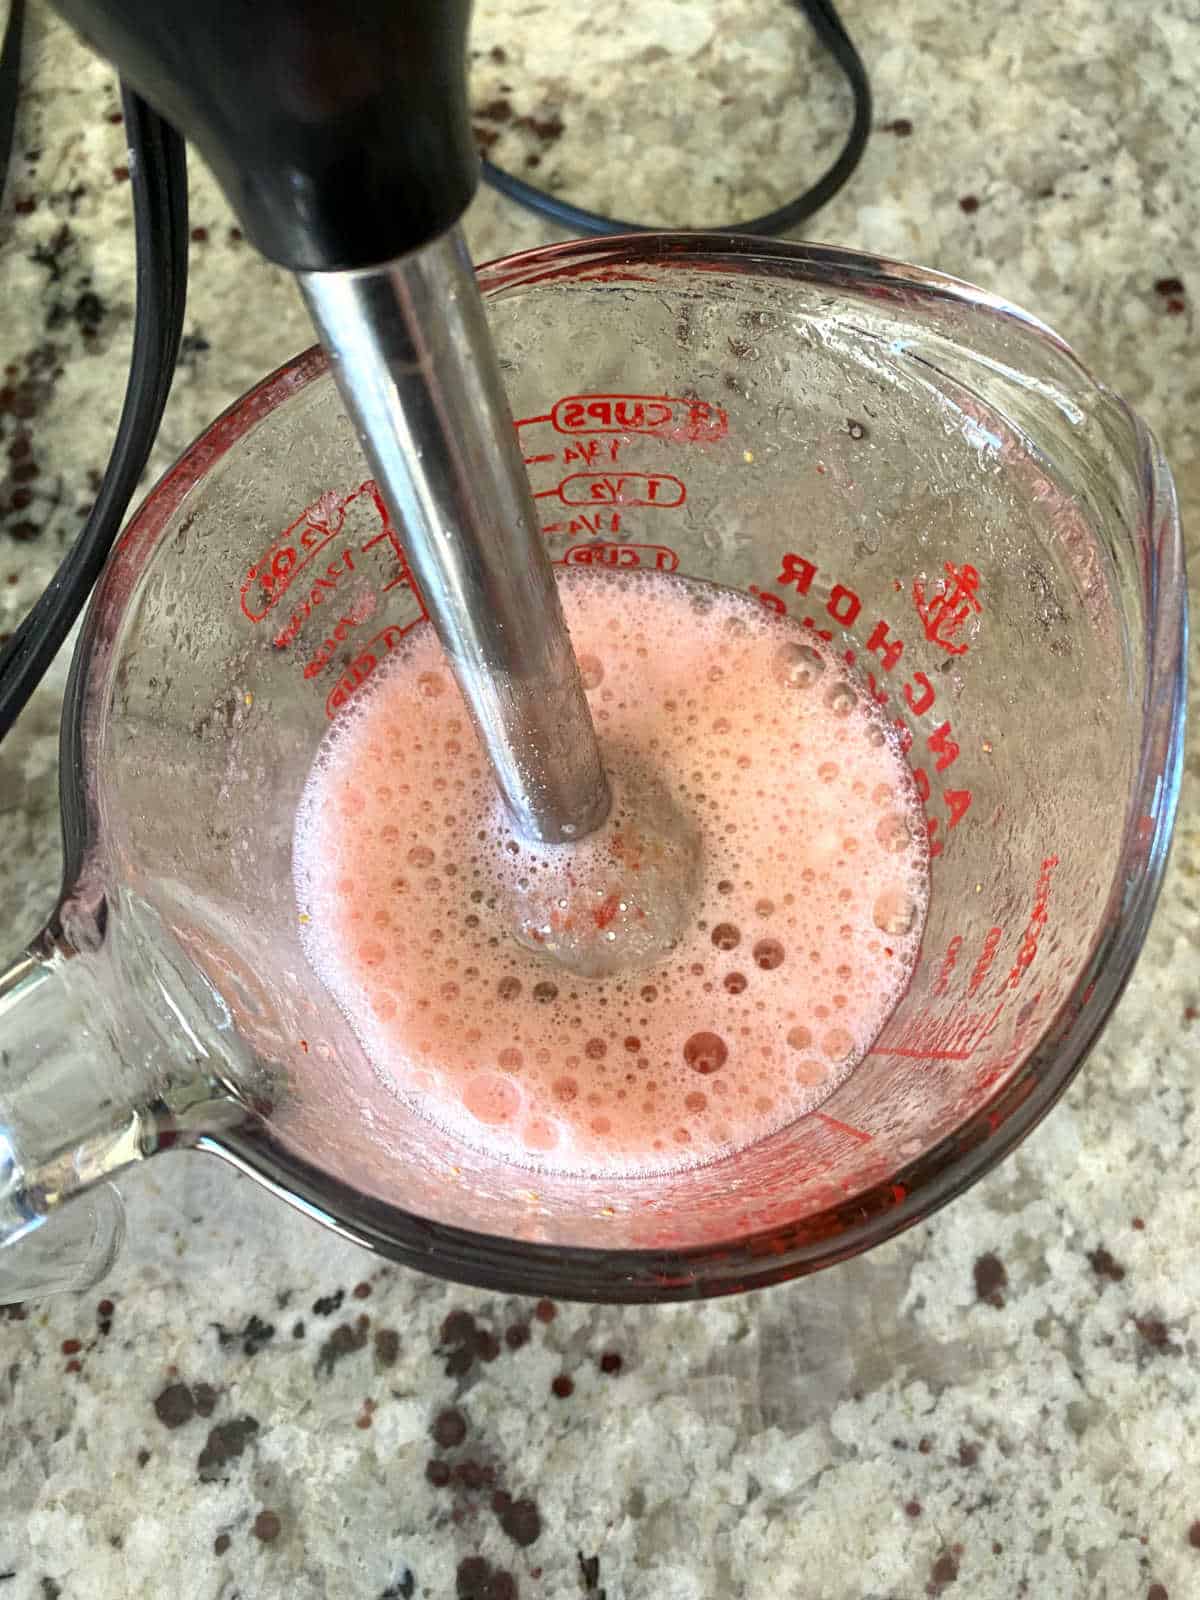 blending strawberries and lemon juice with an immersion blender.